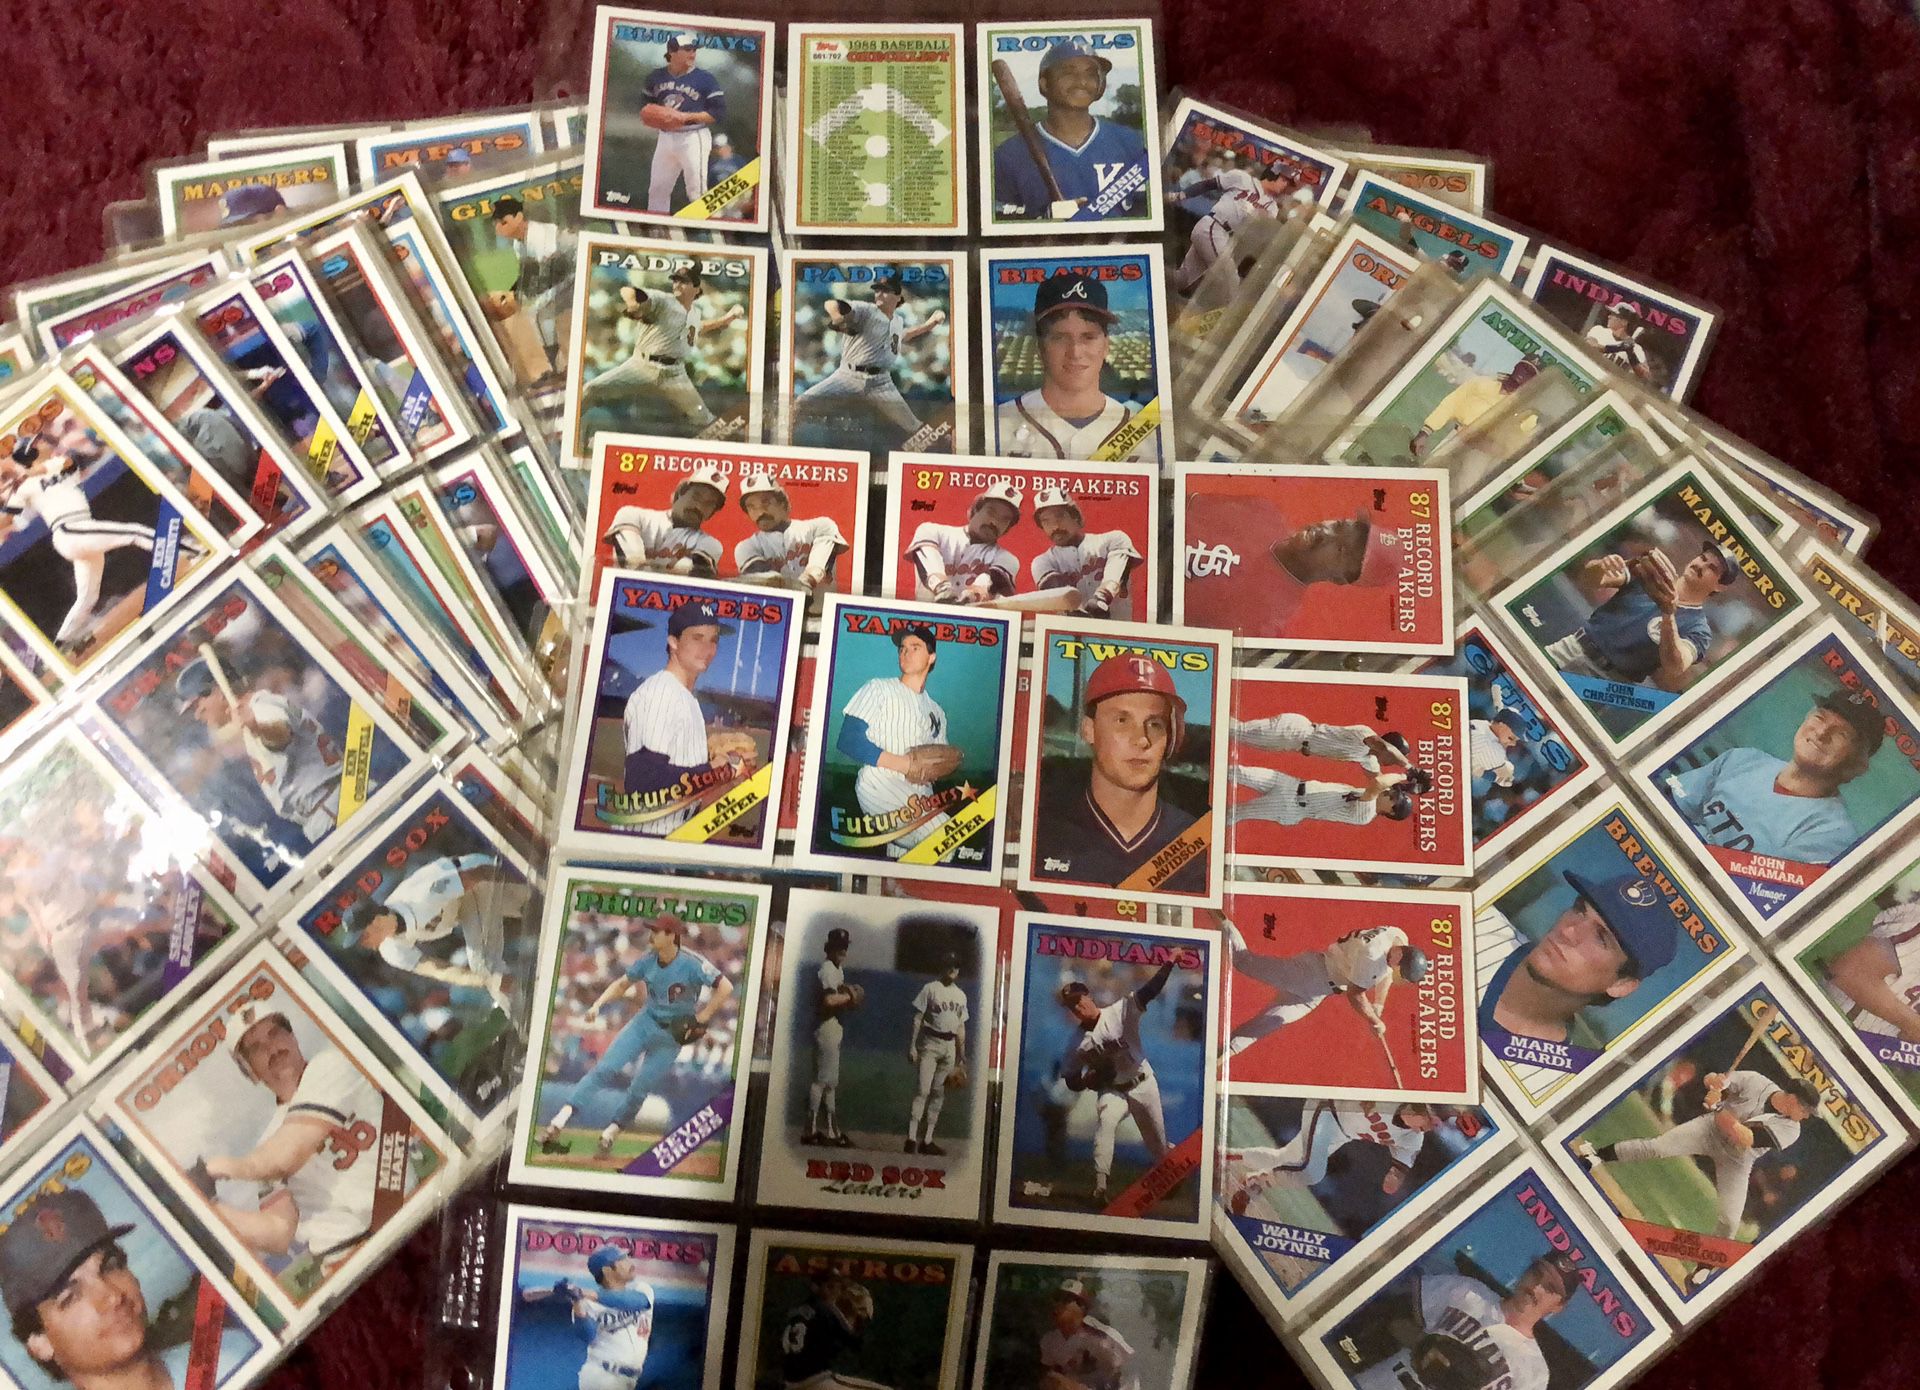 1988 Tops Baseball cards